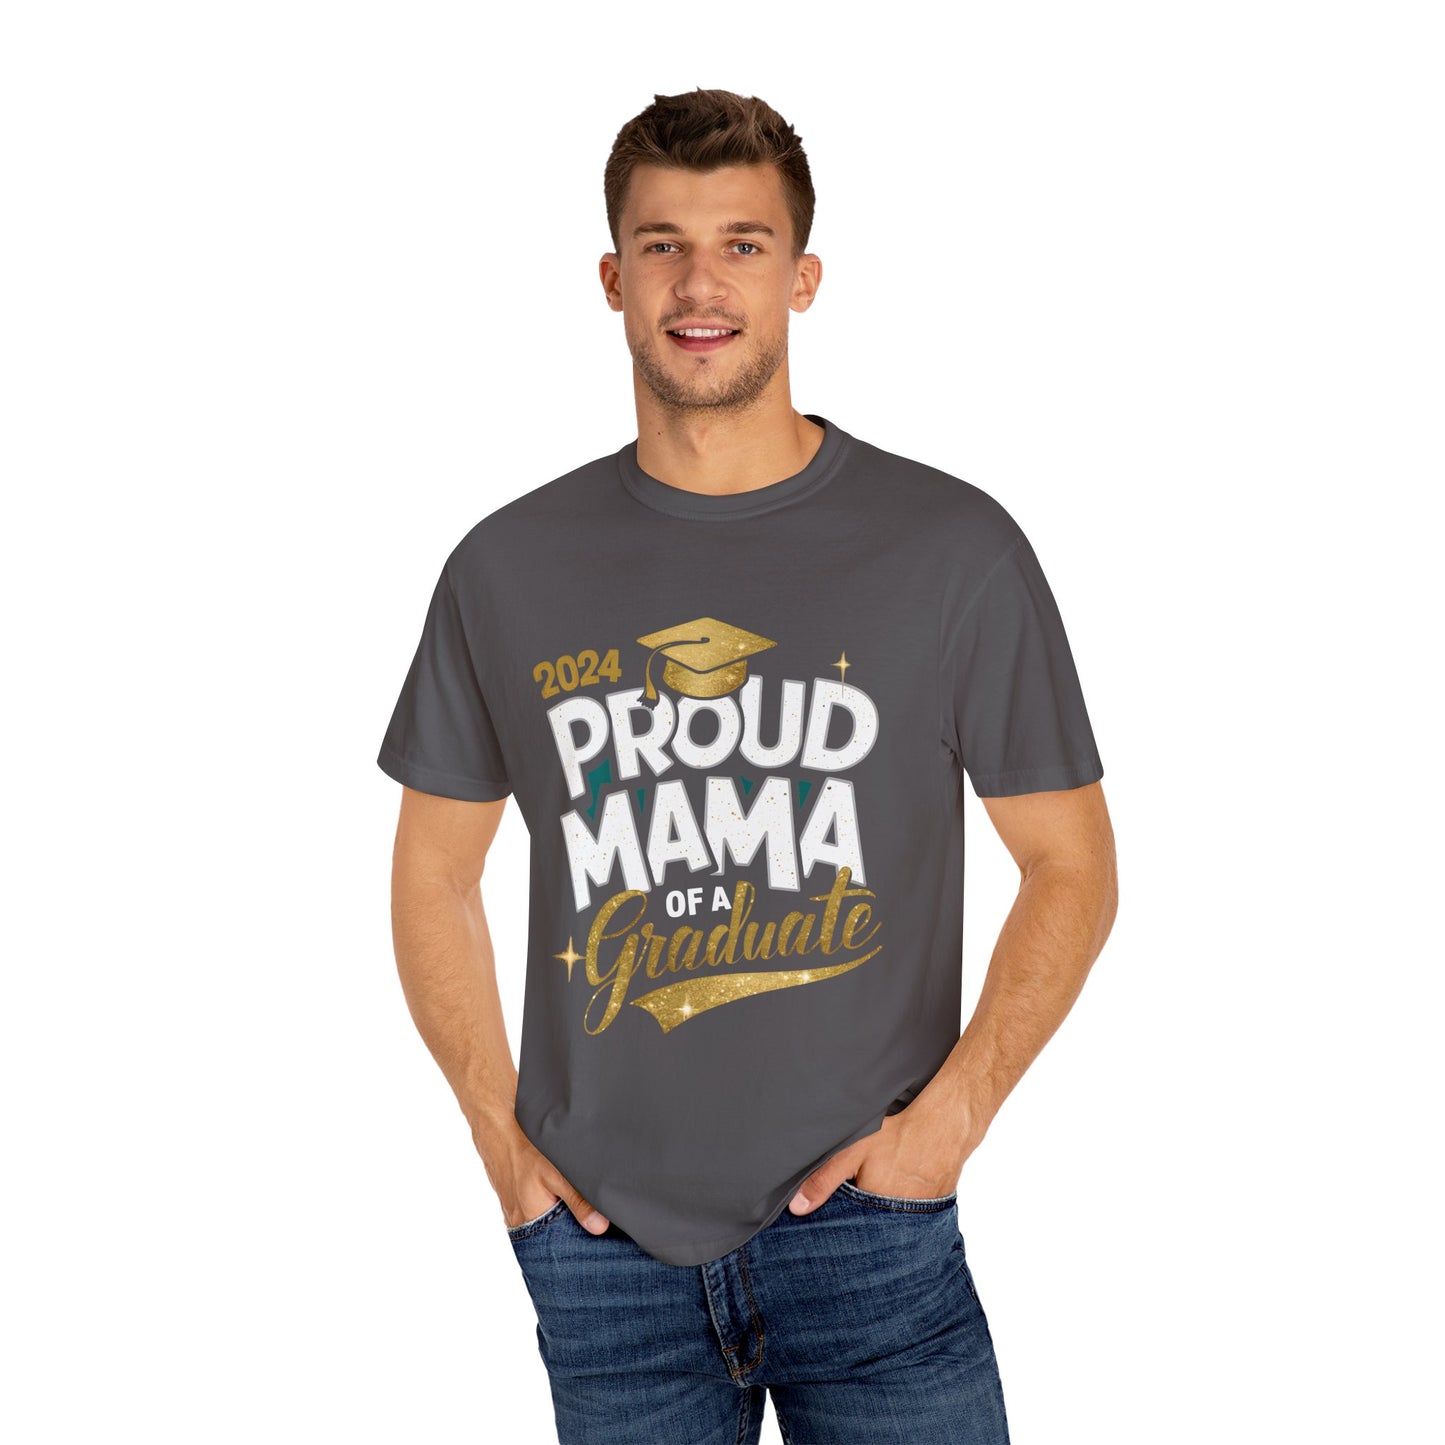 Proud Mama of a 2024 Graduate Unisex Garment-dyed T-shirt Cotton Funny Humorous Graphic Soft Premium Unisex Men Women Graphite T-shirt Birthday Gift-39